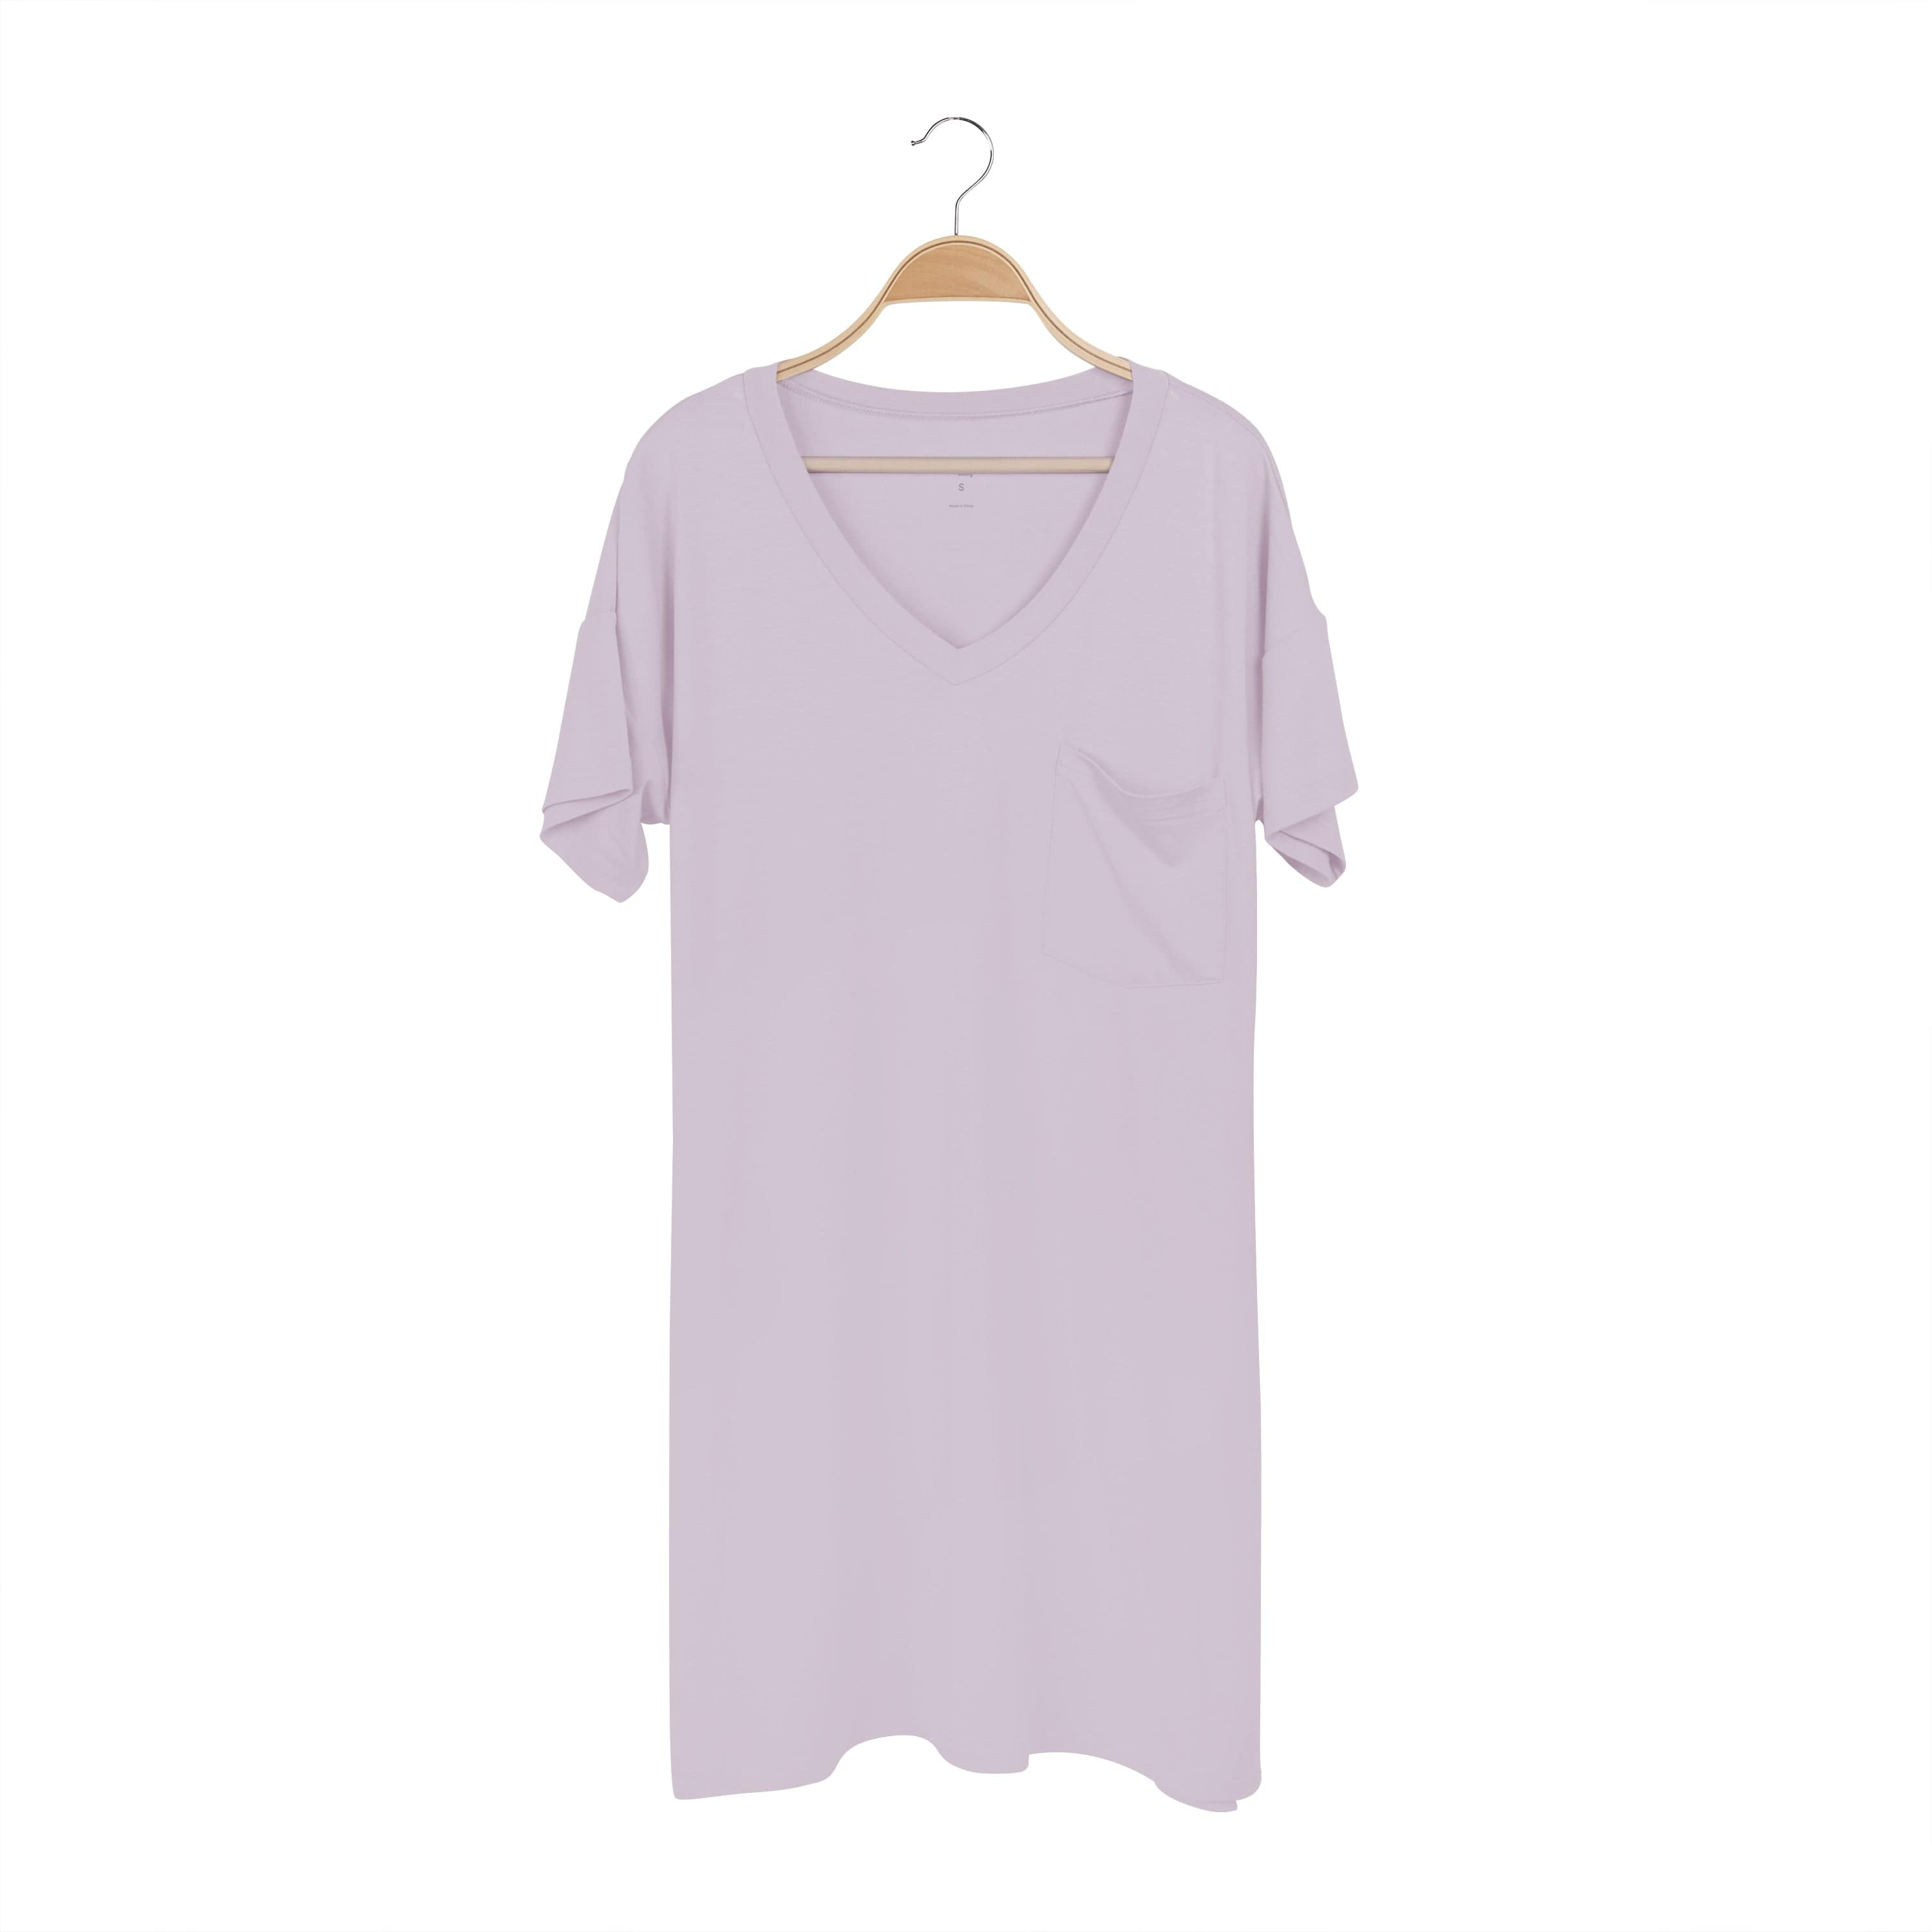 Kyte Baby Adult T-Shirt Dress Women's T-Shirt Dress in Wisteria